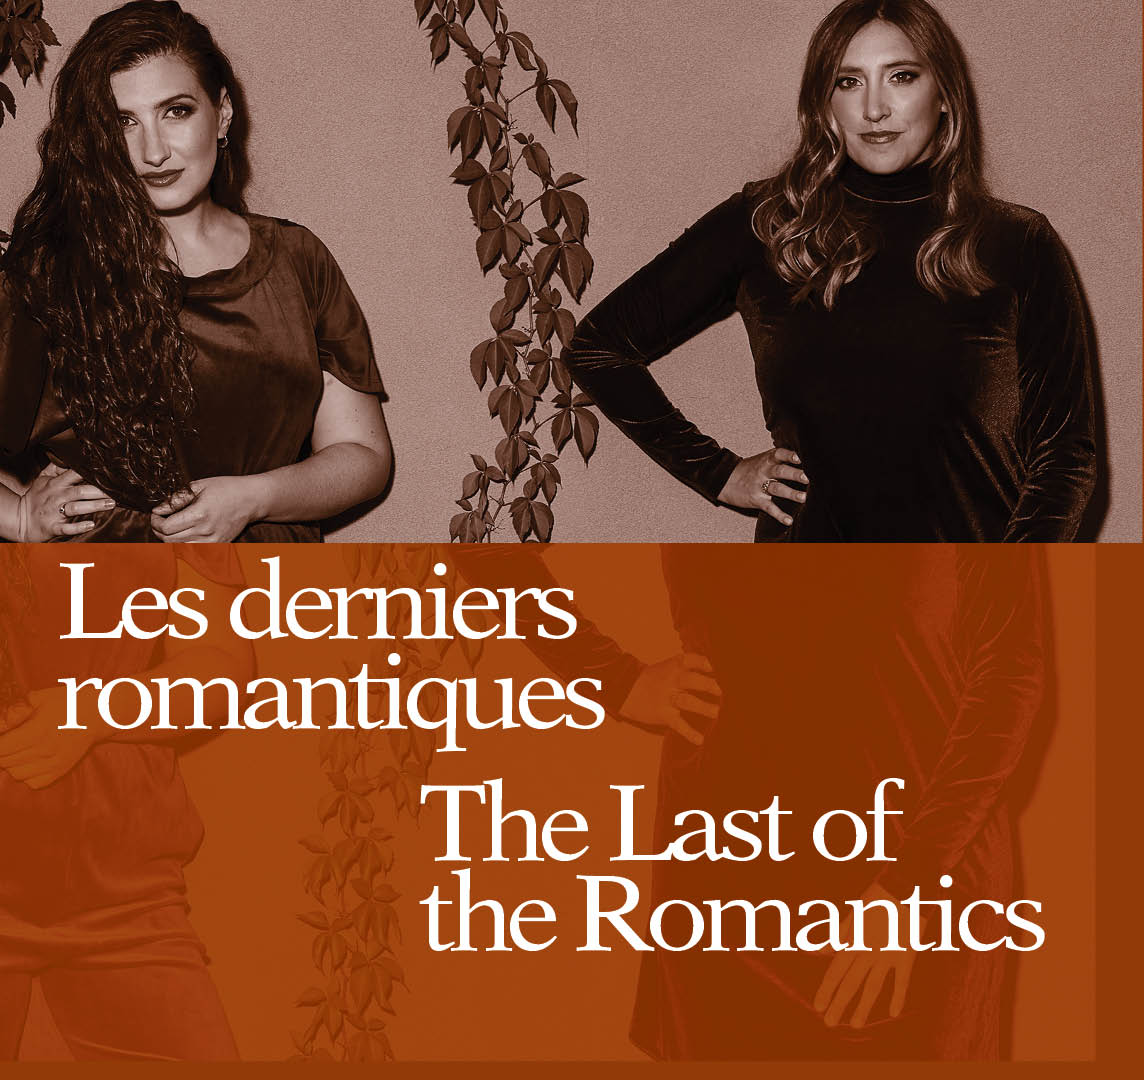 The Last of Romantics